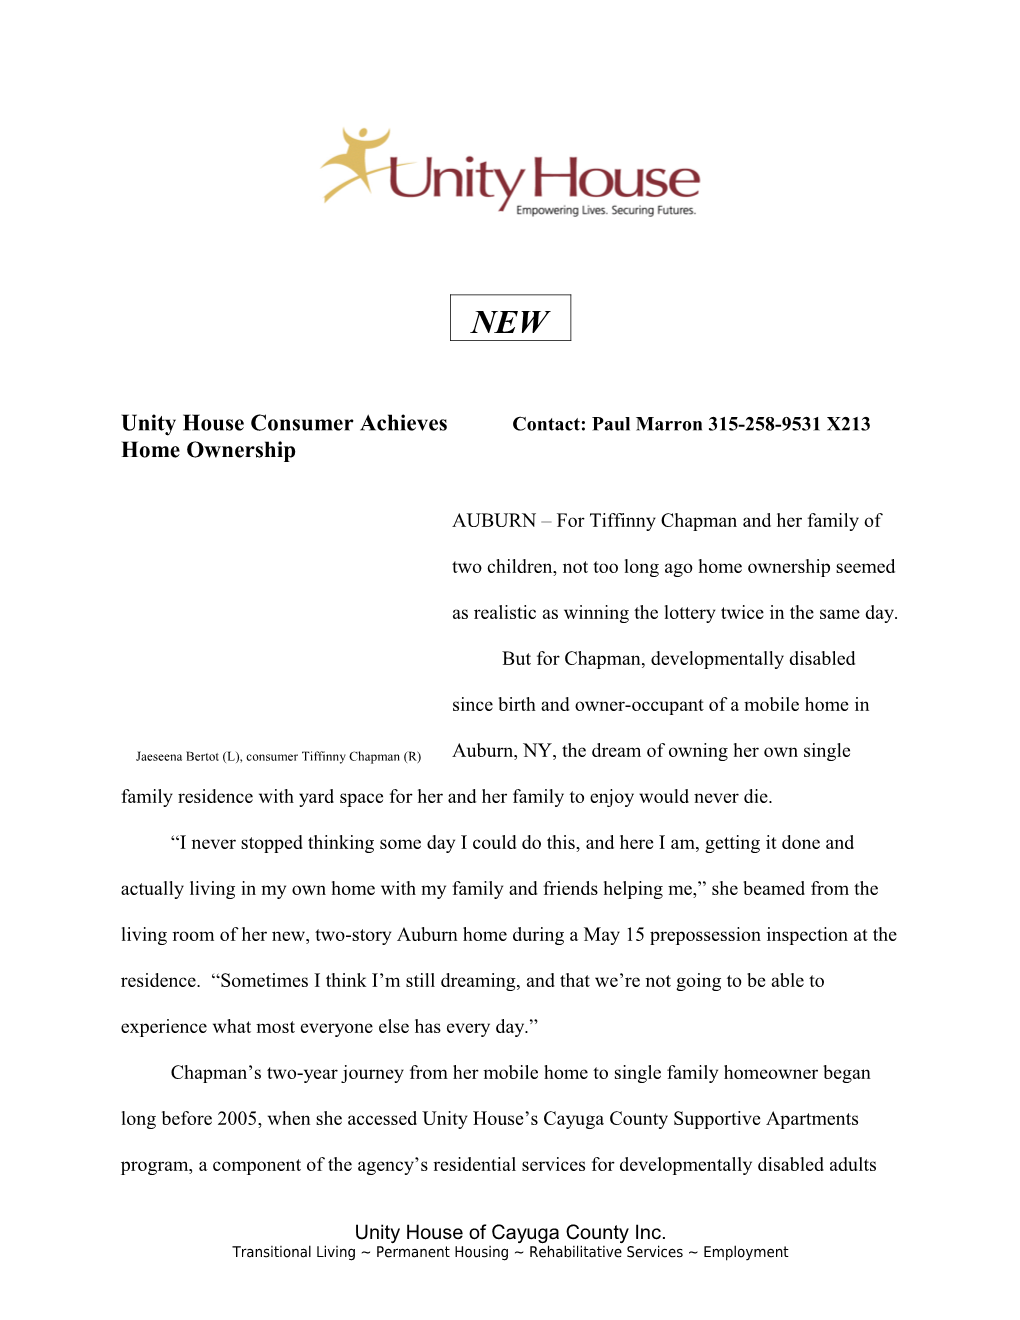 Unity House Consumer Achieves Contact: Paul Marron 315-258-9531 X213